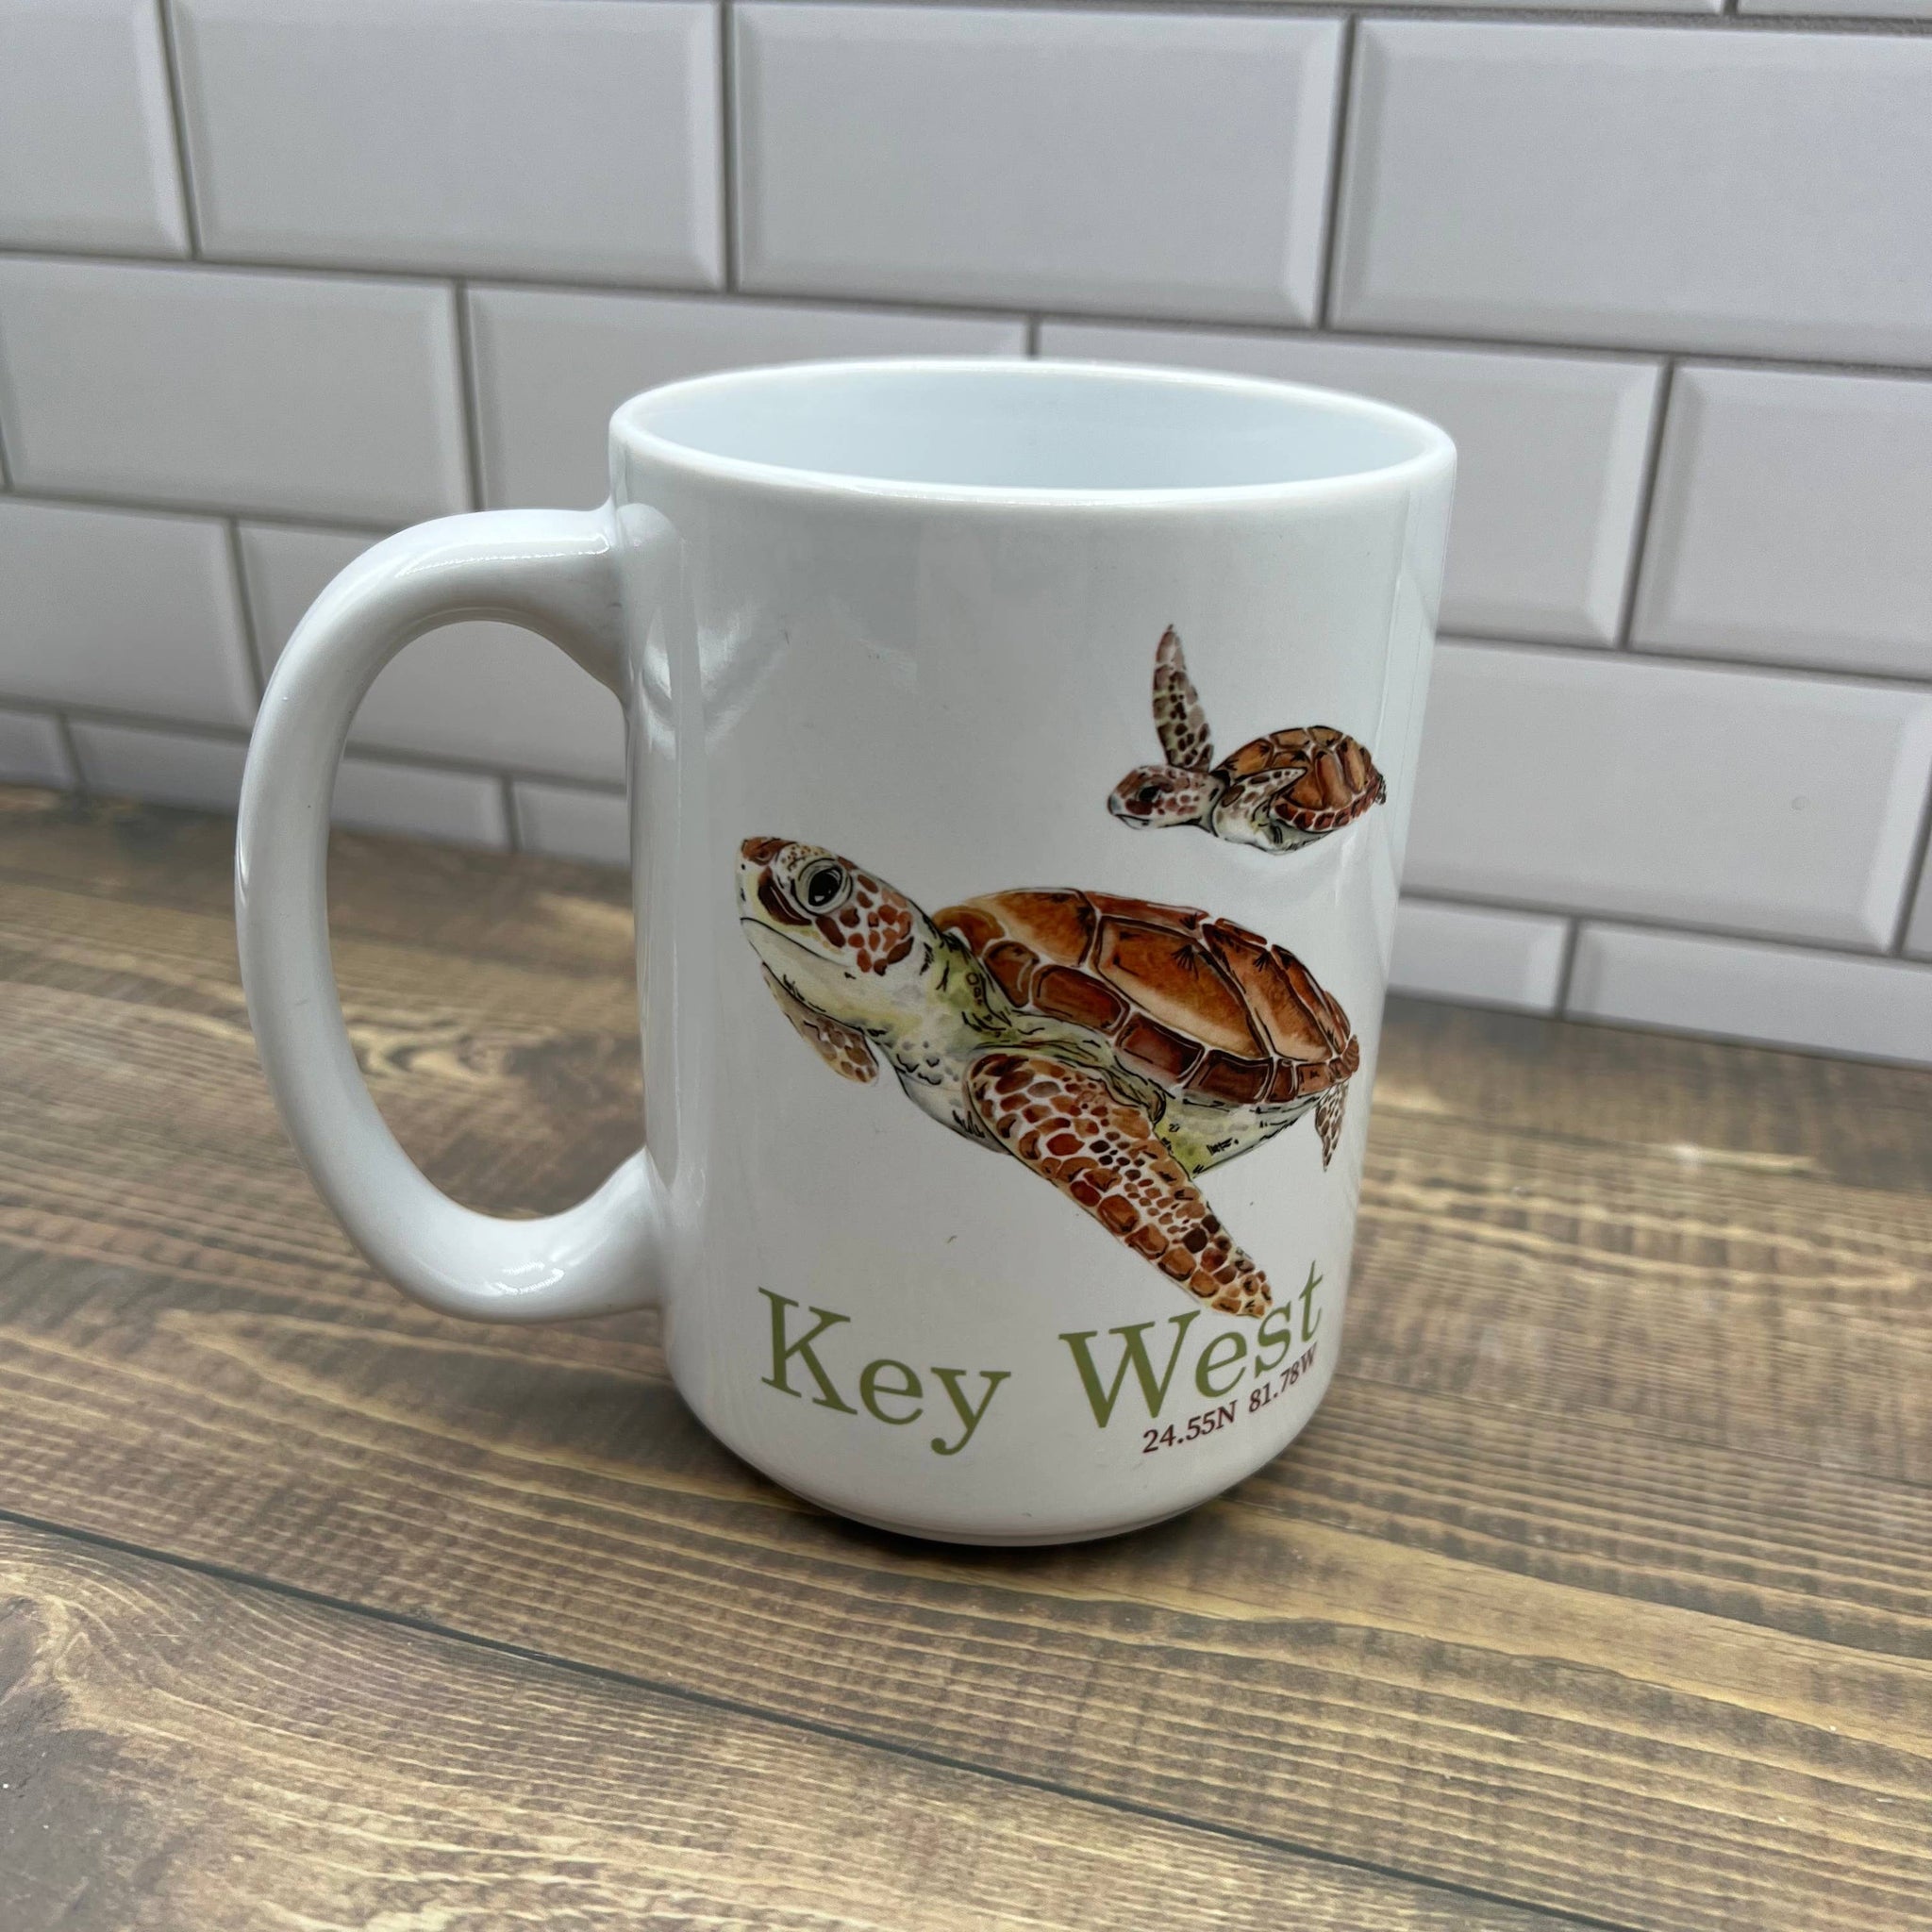 Western Painted Turtle Large Coffee Mug 15 Oz